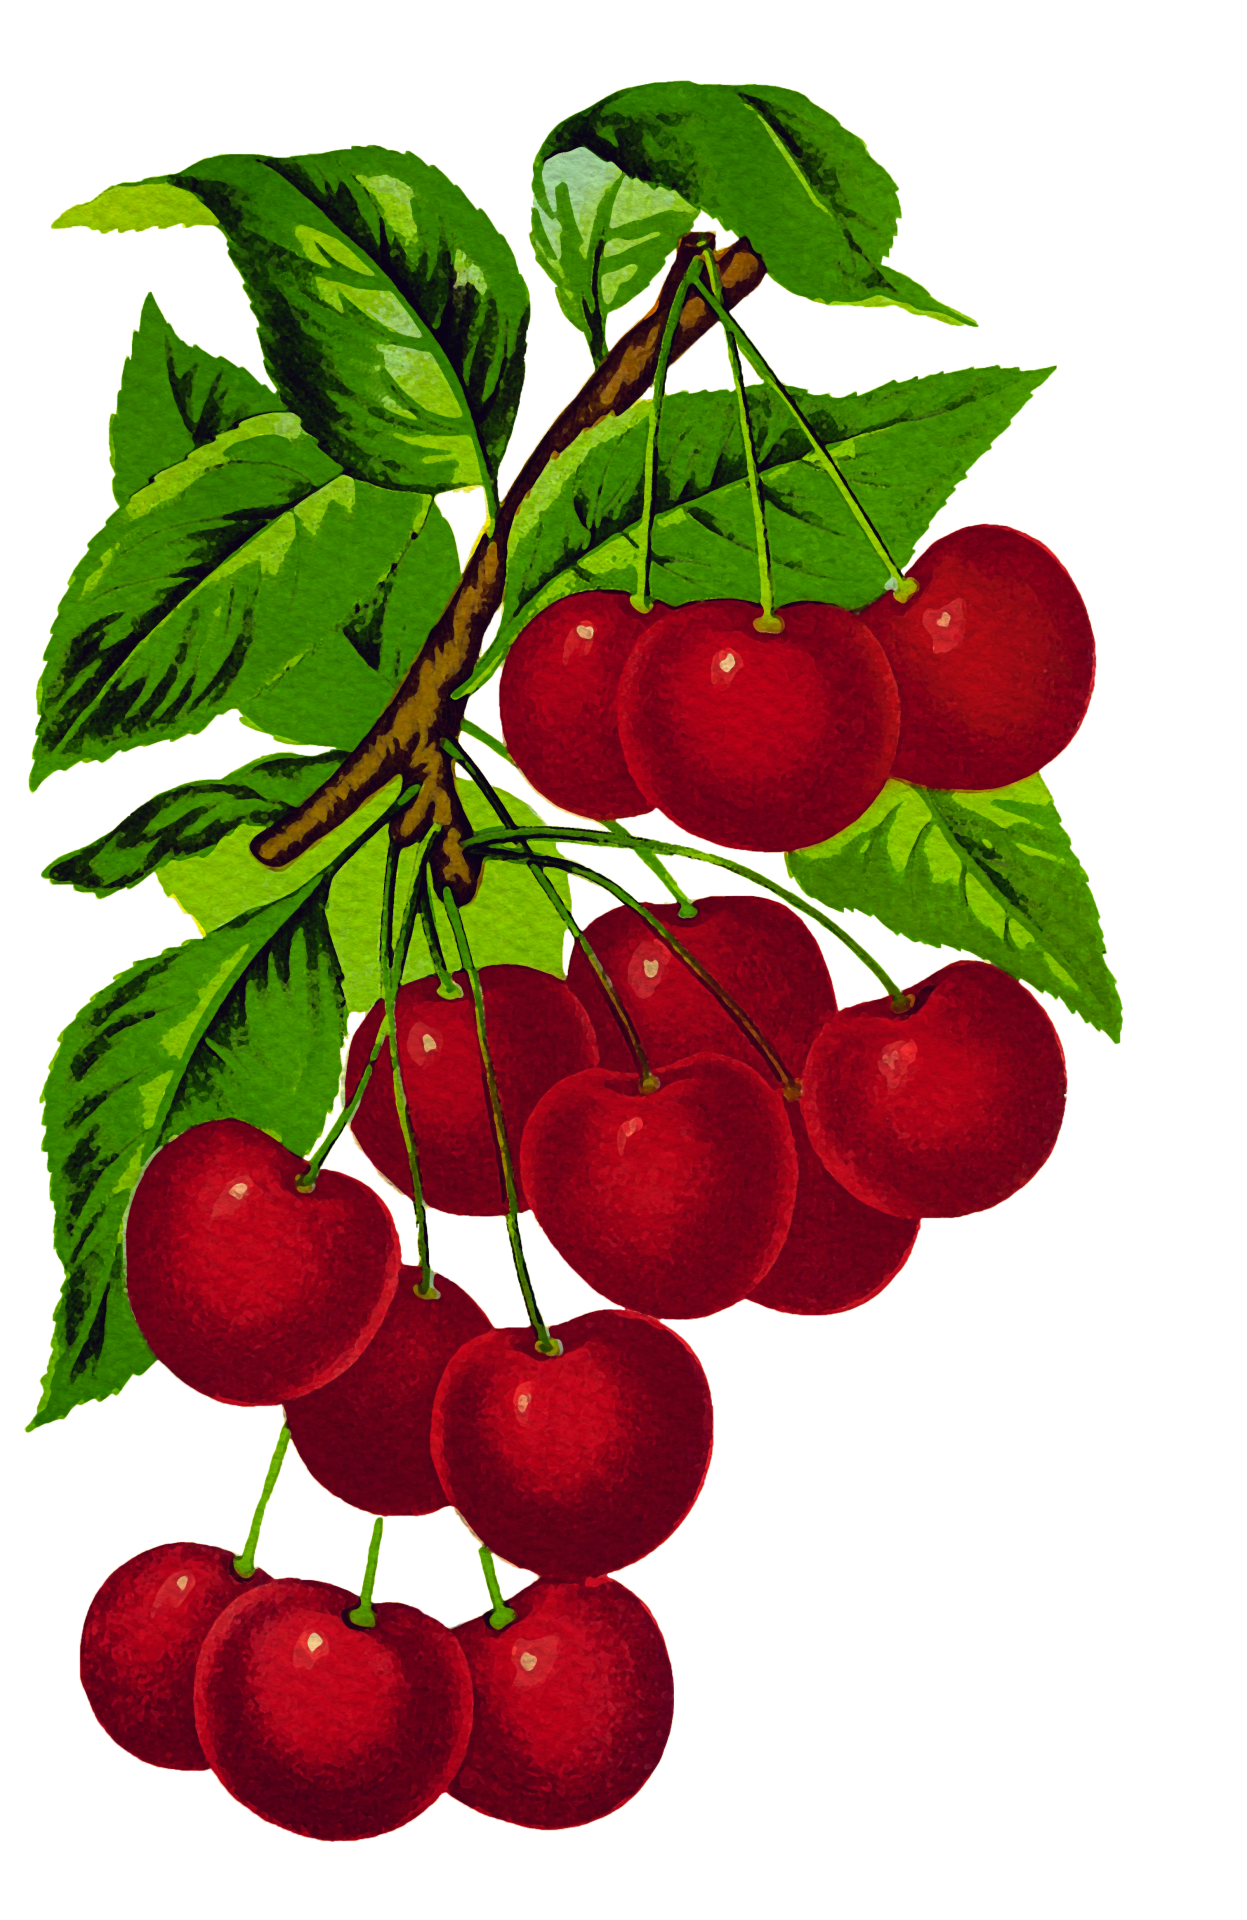 Cherries On Branch Watercolor